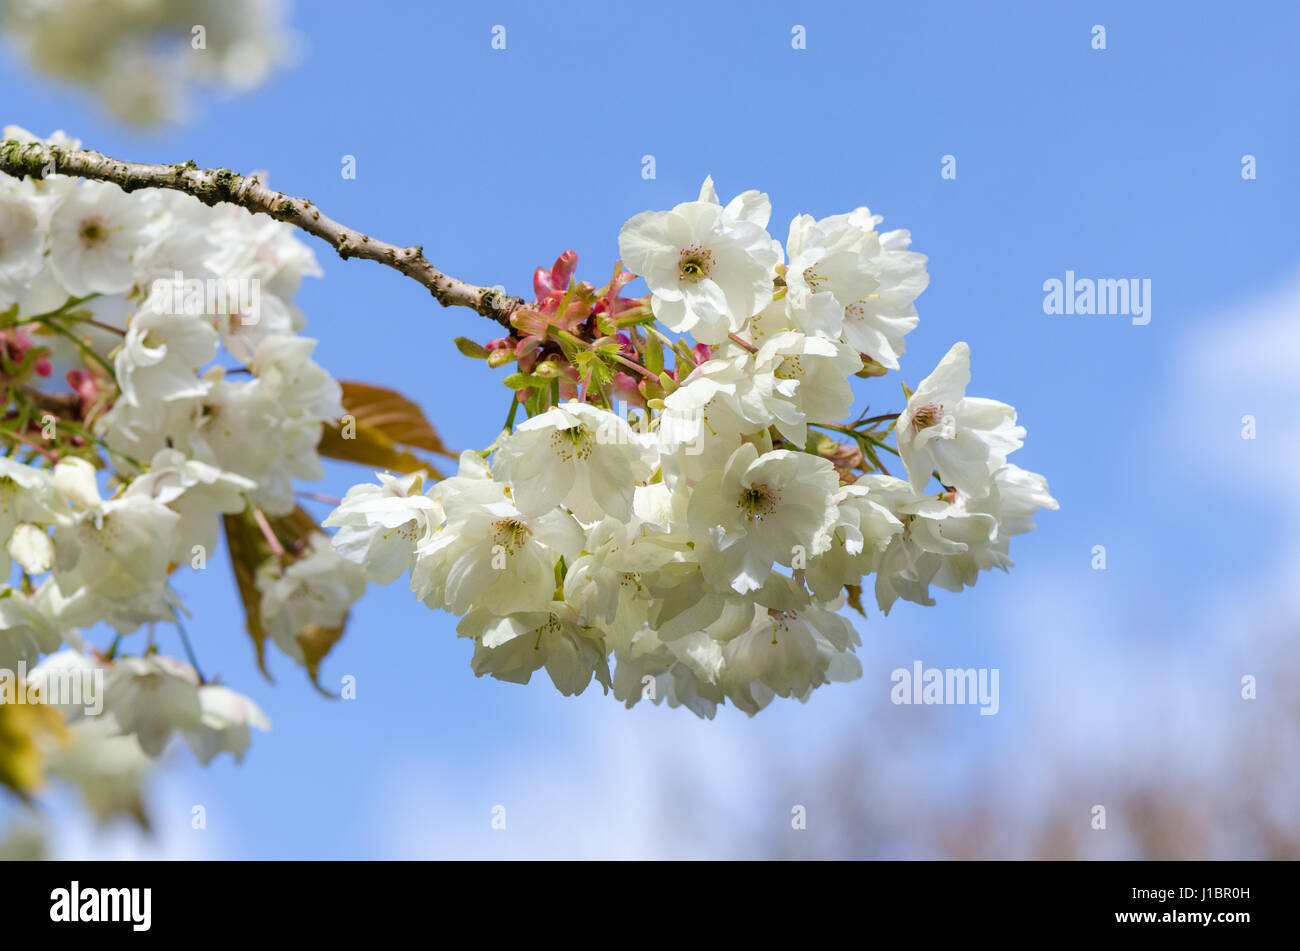 Spring blossom on tree Stock Photo